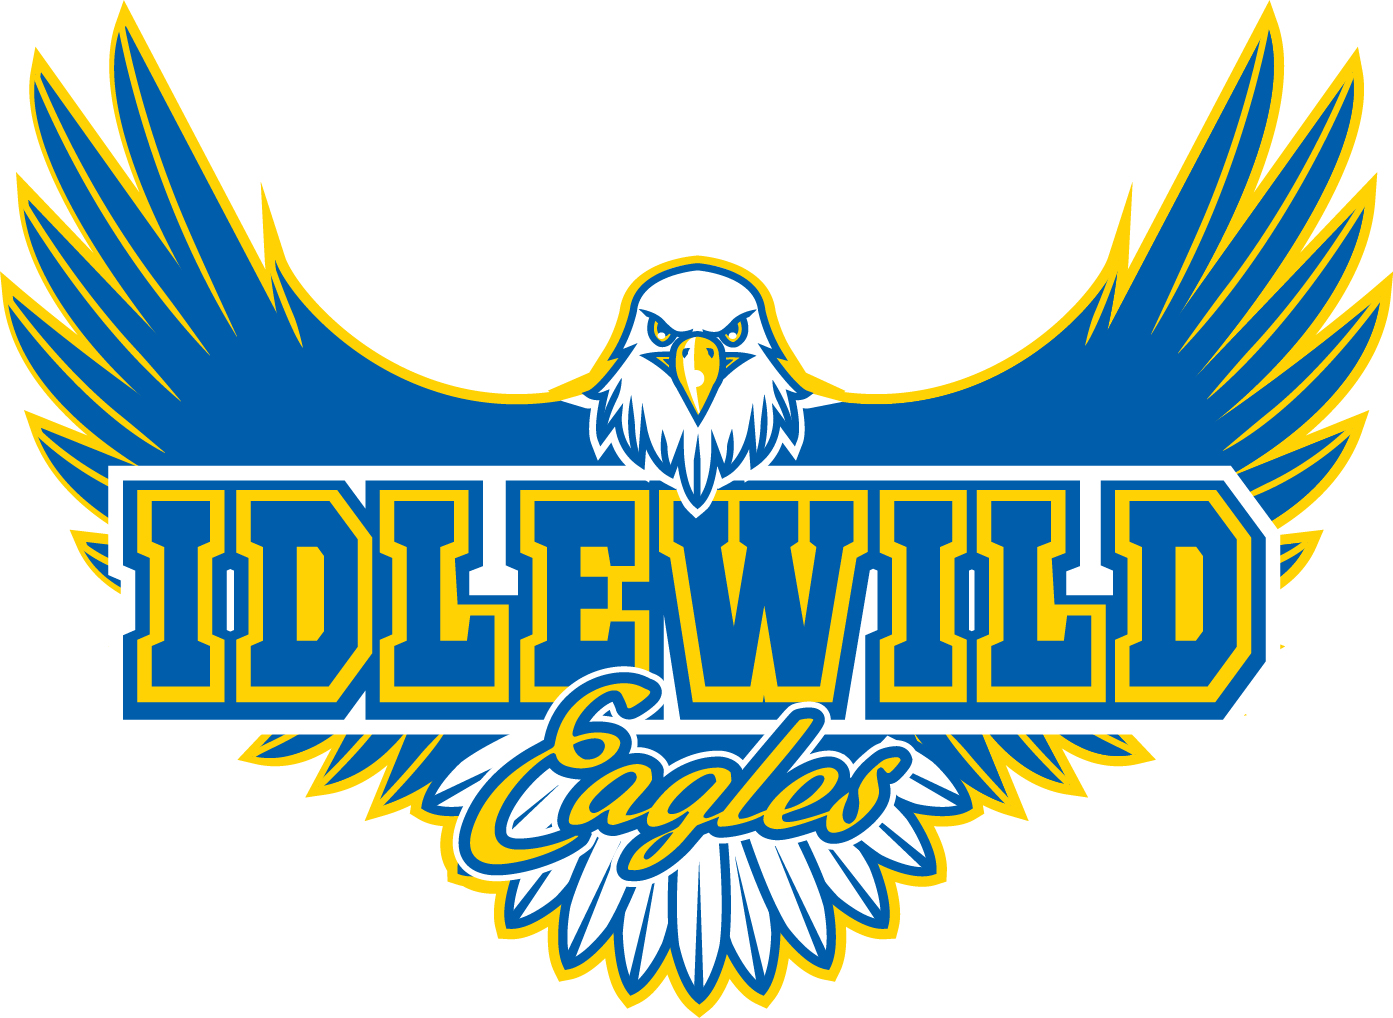 Idlewild Elementary / Homepage